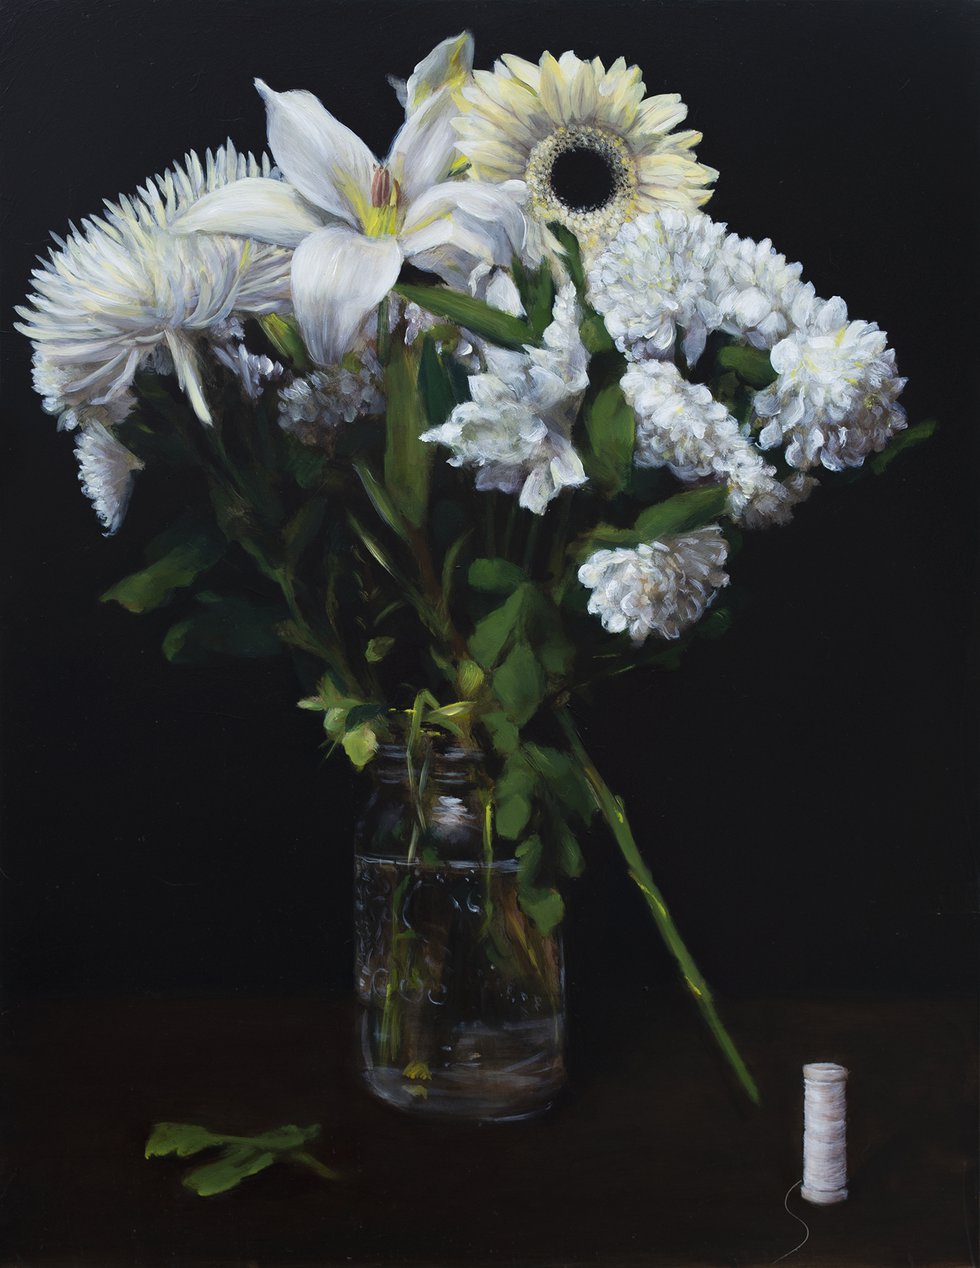 Michael Corner, "Flowers from Dan I," 2022